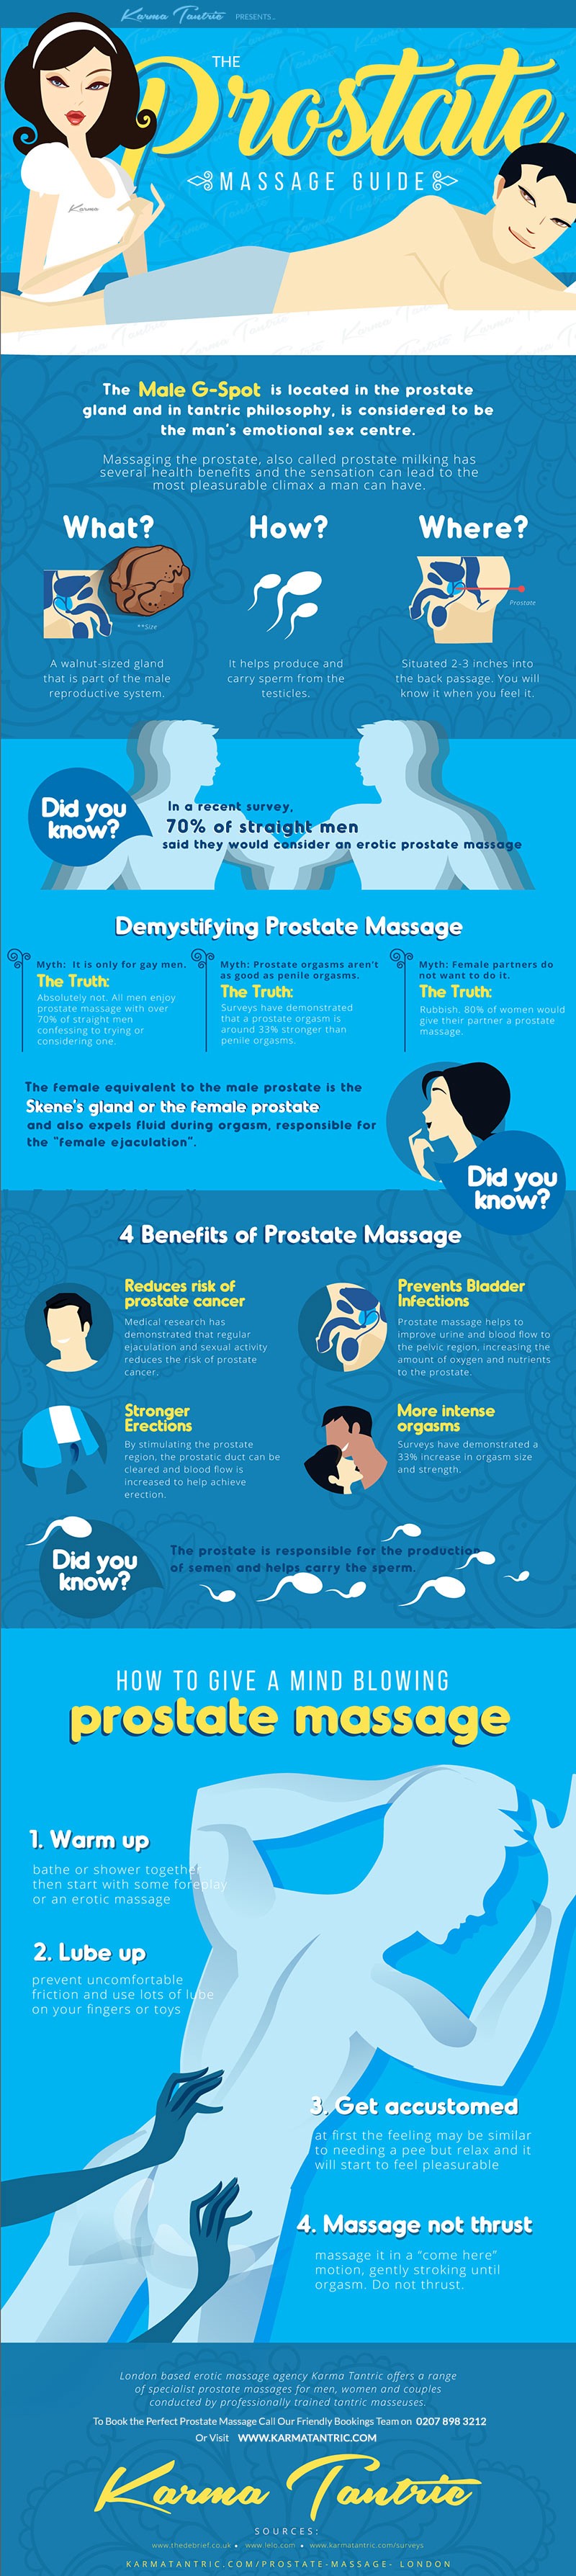 prostate massage clinic